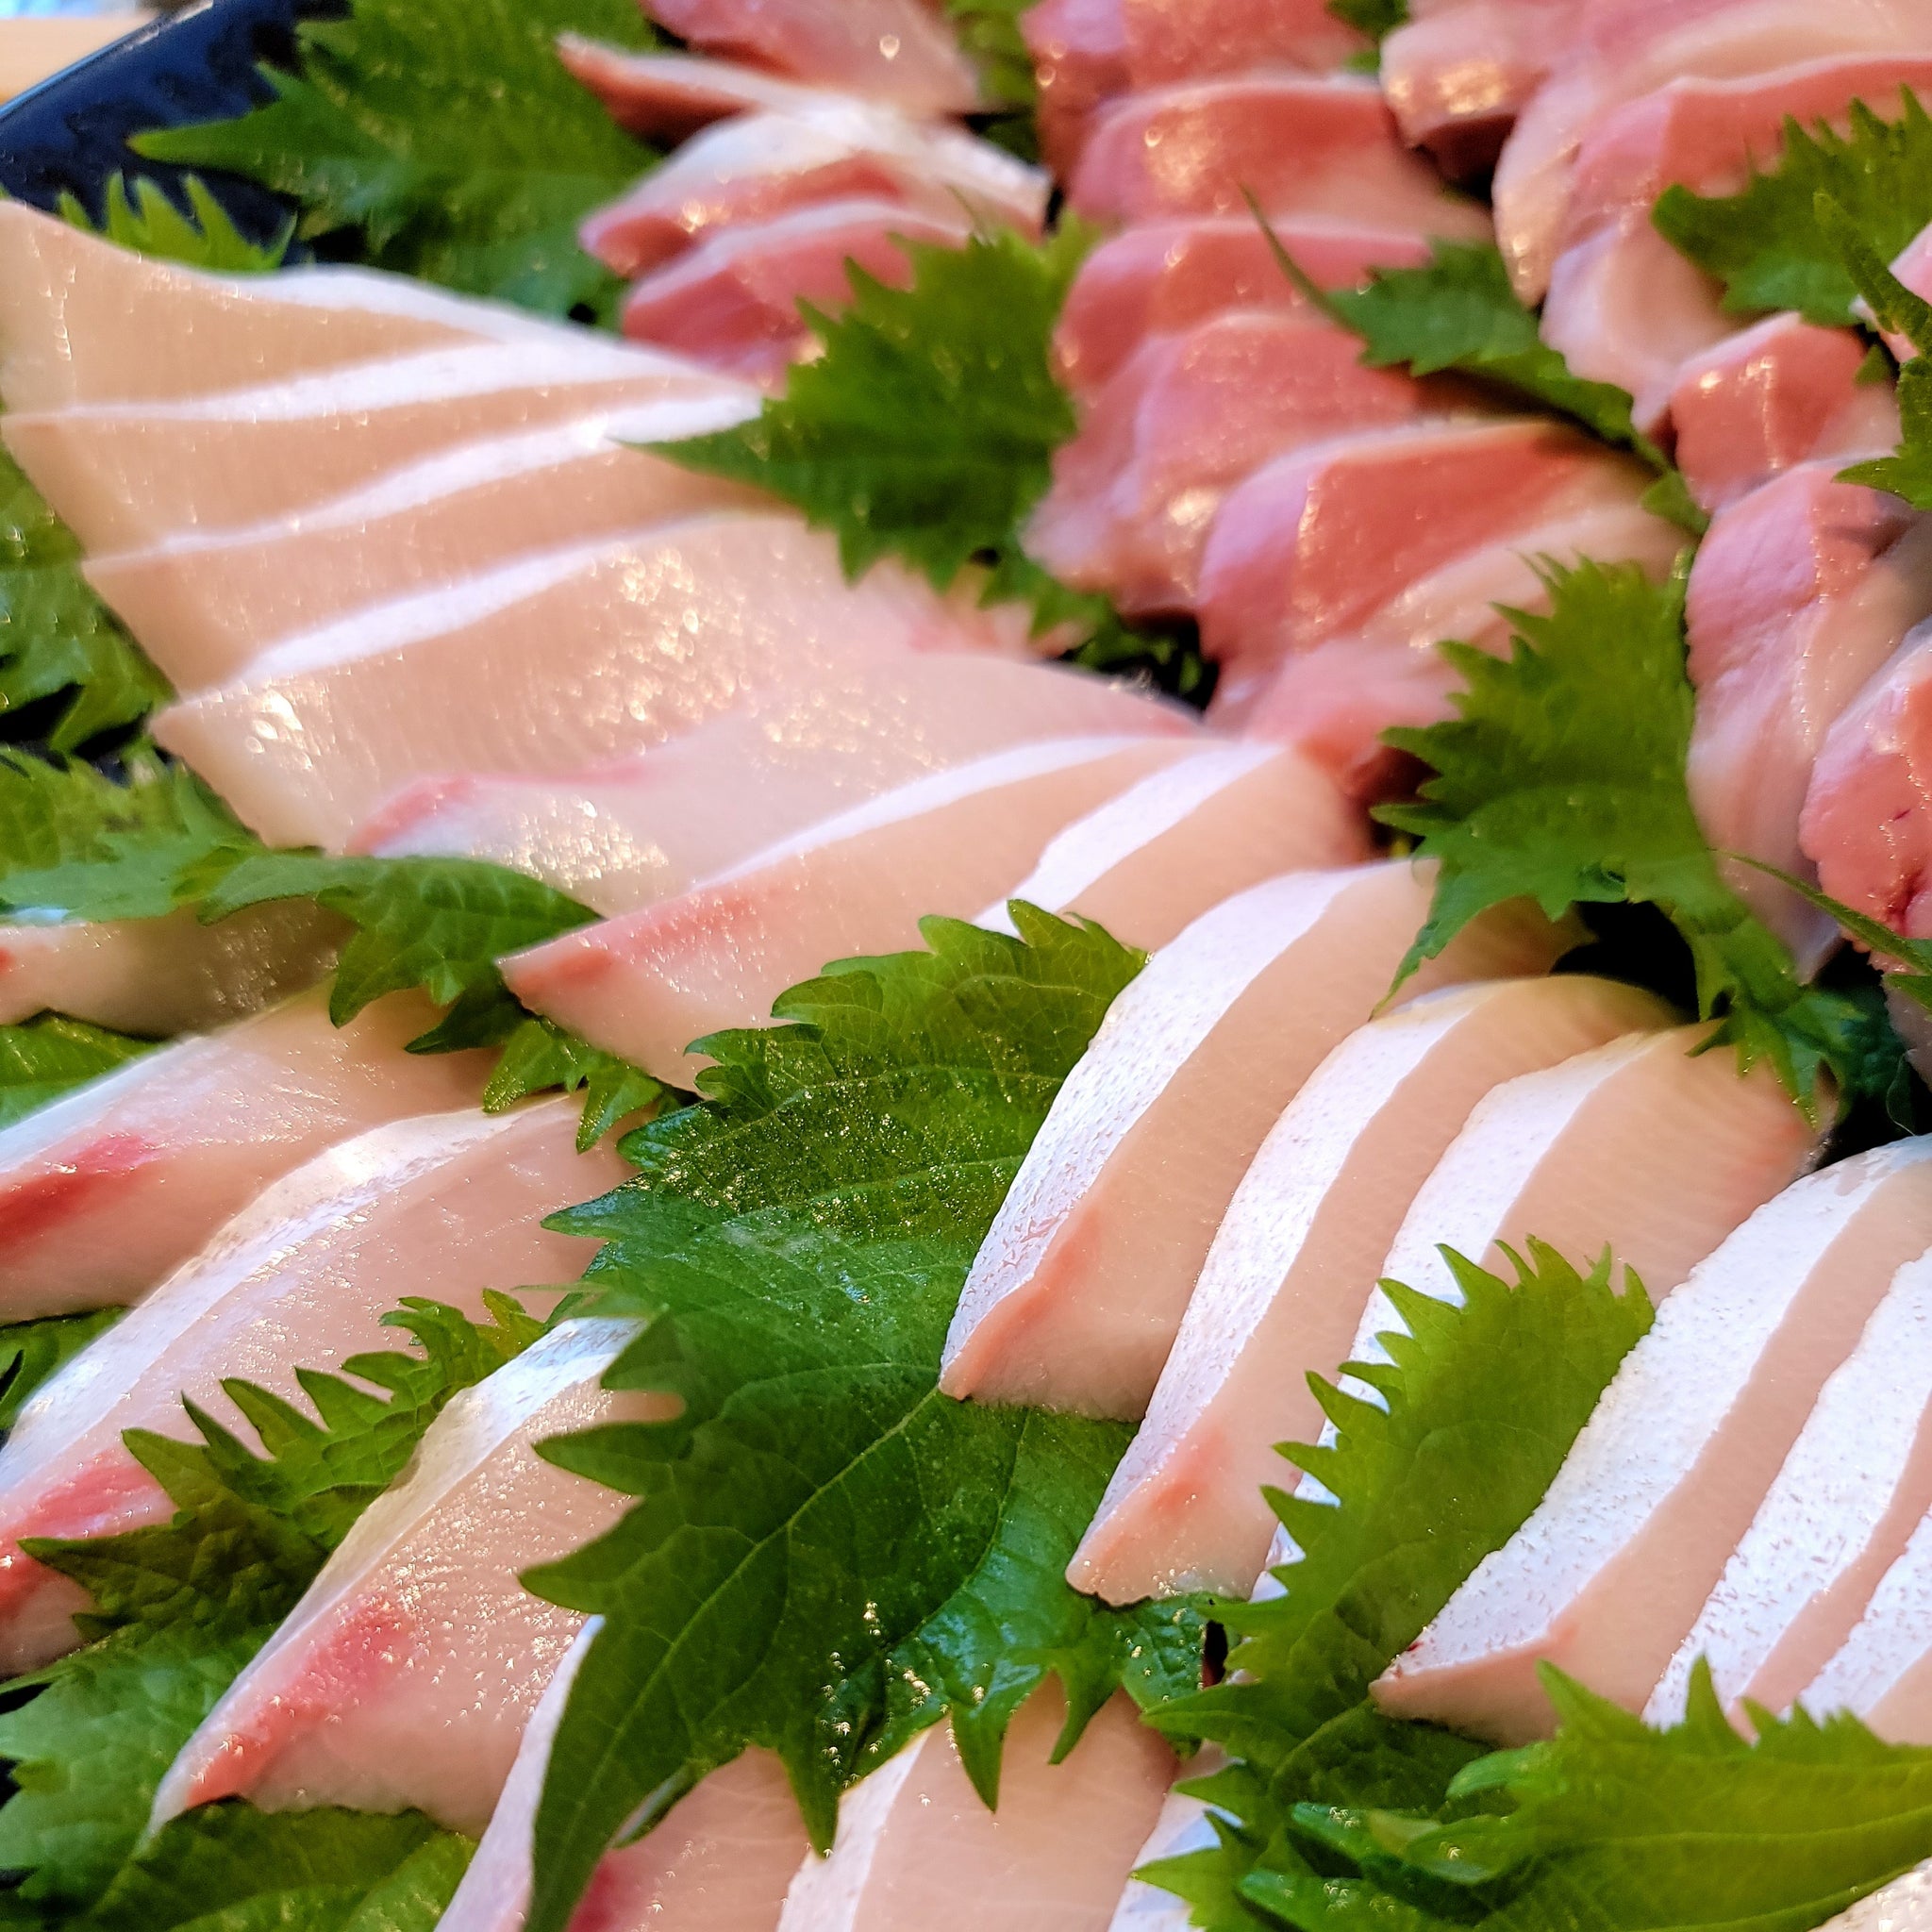 Fresh Hamachi (Buri) Loin  日本新鮮鰤魚刺身 "日本開運魚"